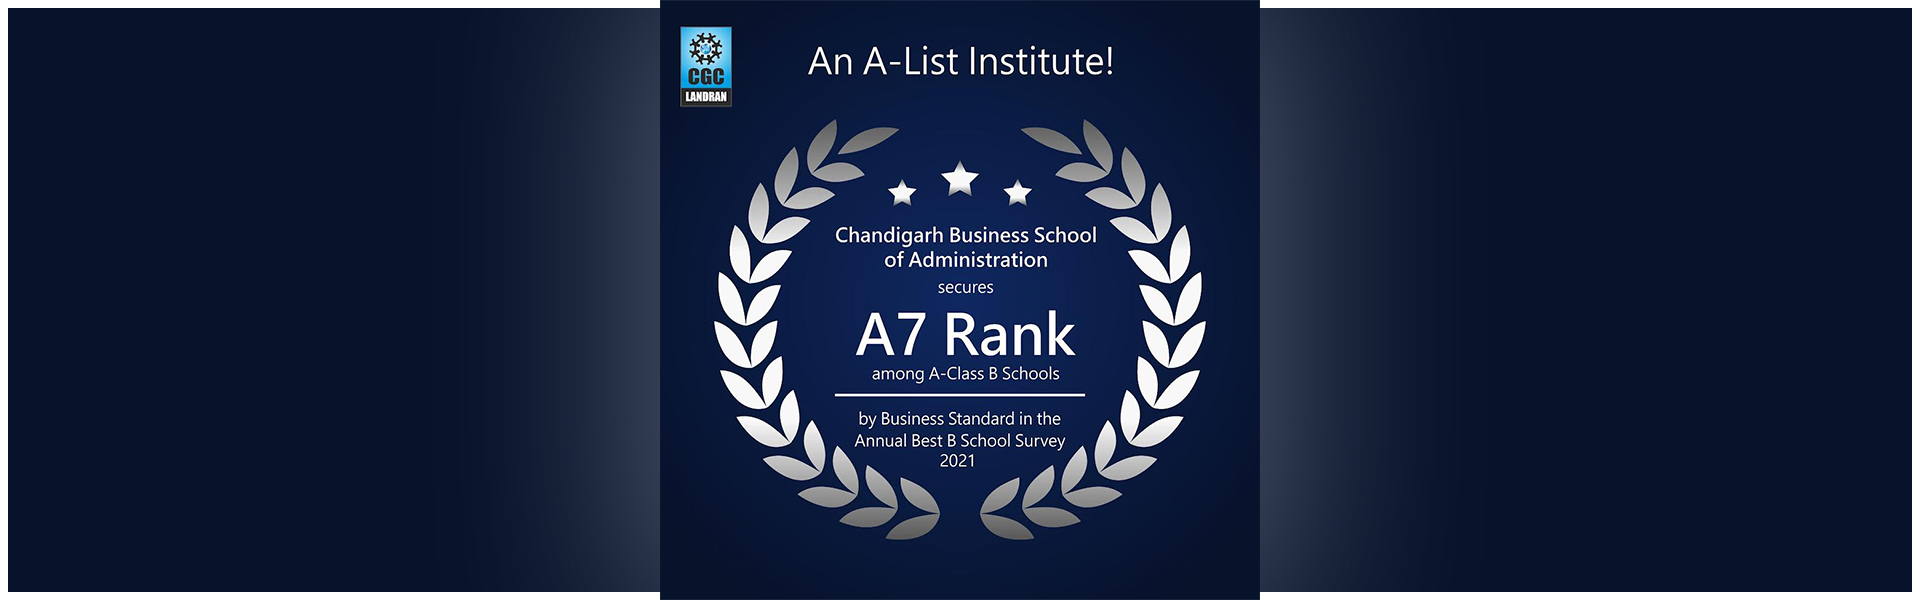 CBSA secured A7 rank under Business Annual Best B School survey, 2021 